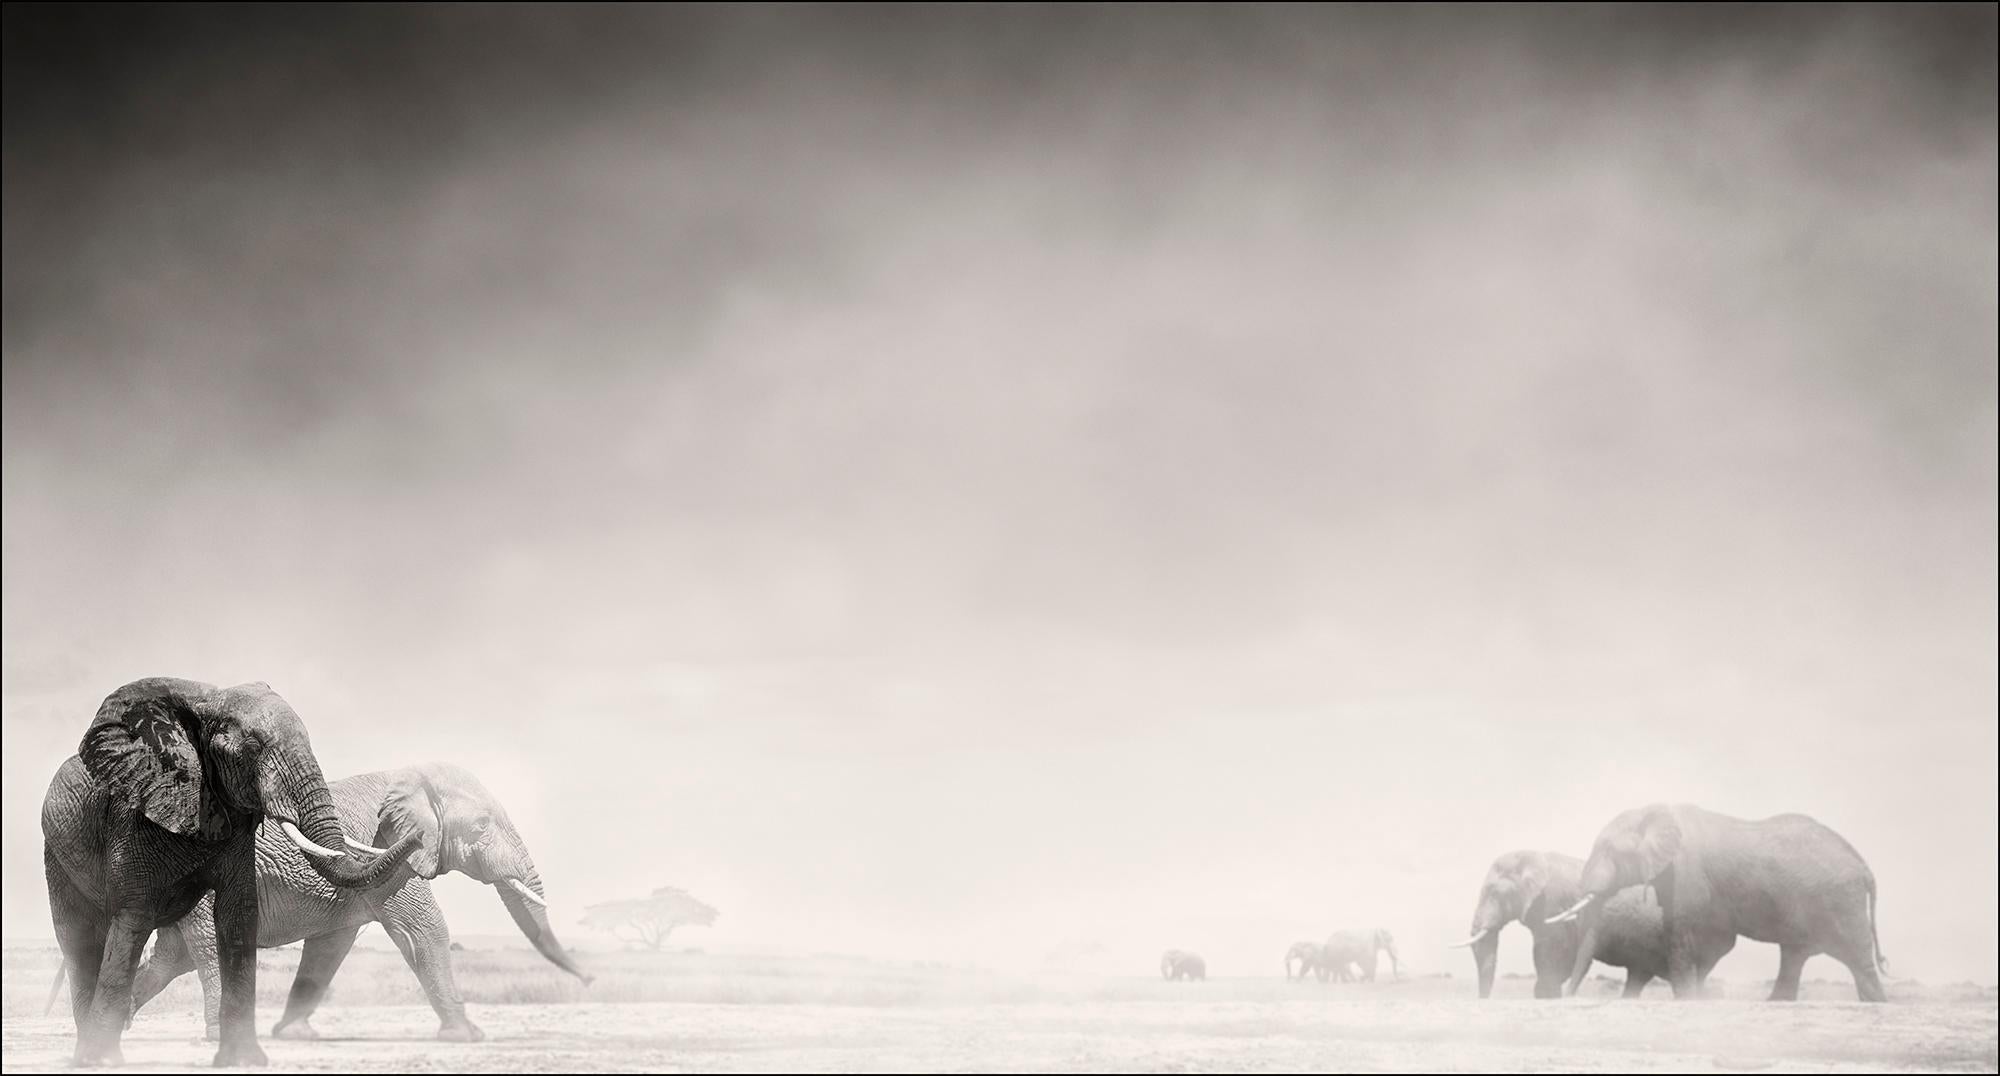 Joachim Schmeisser Landscape Photograph - Elephants in the Dust I, Kenya, Elephant, wildlife, b&w photography